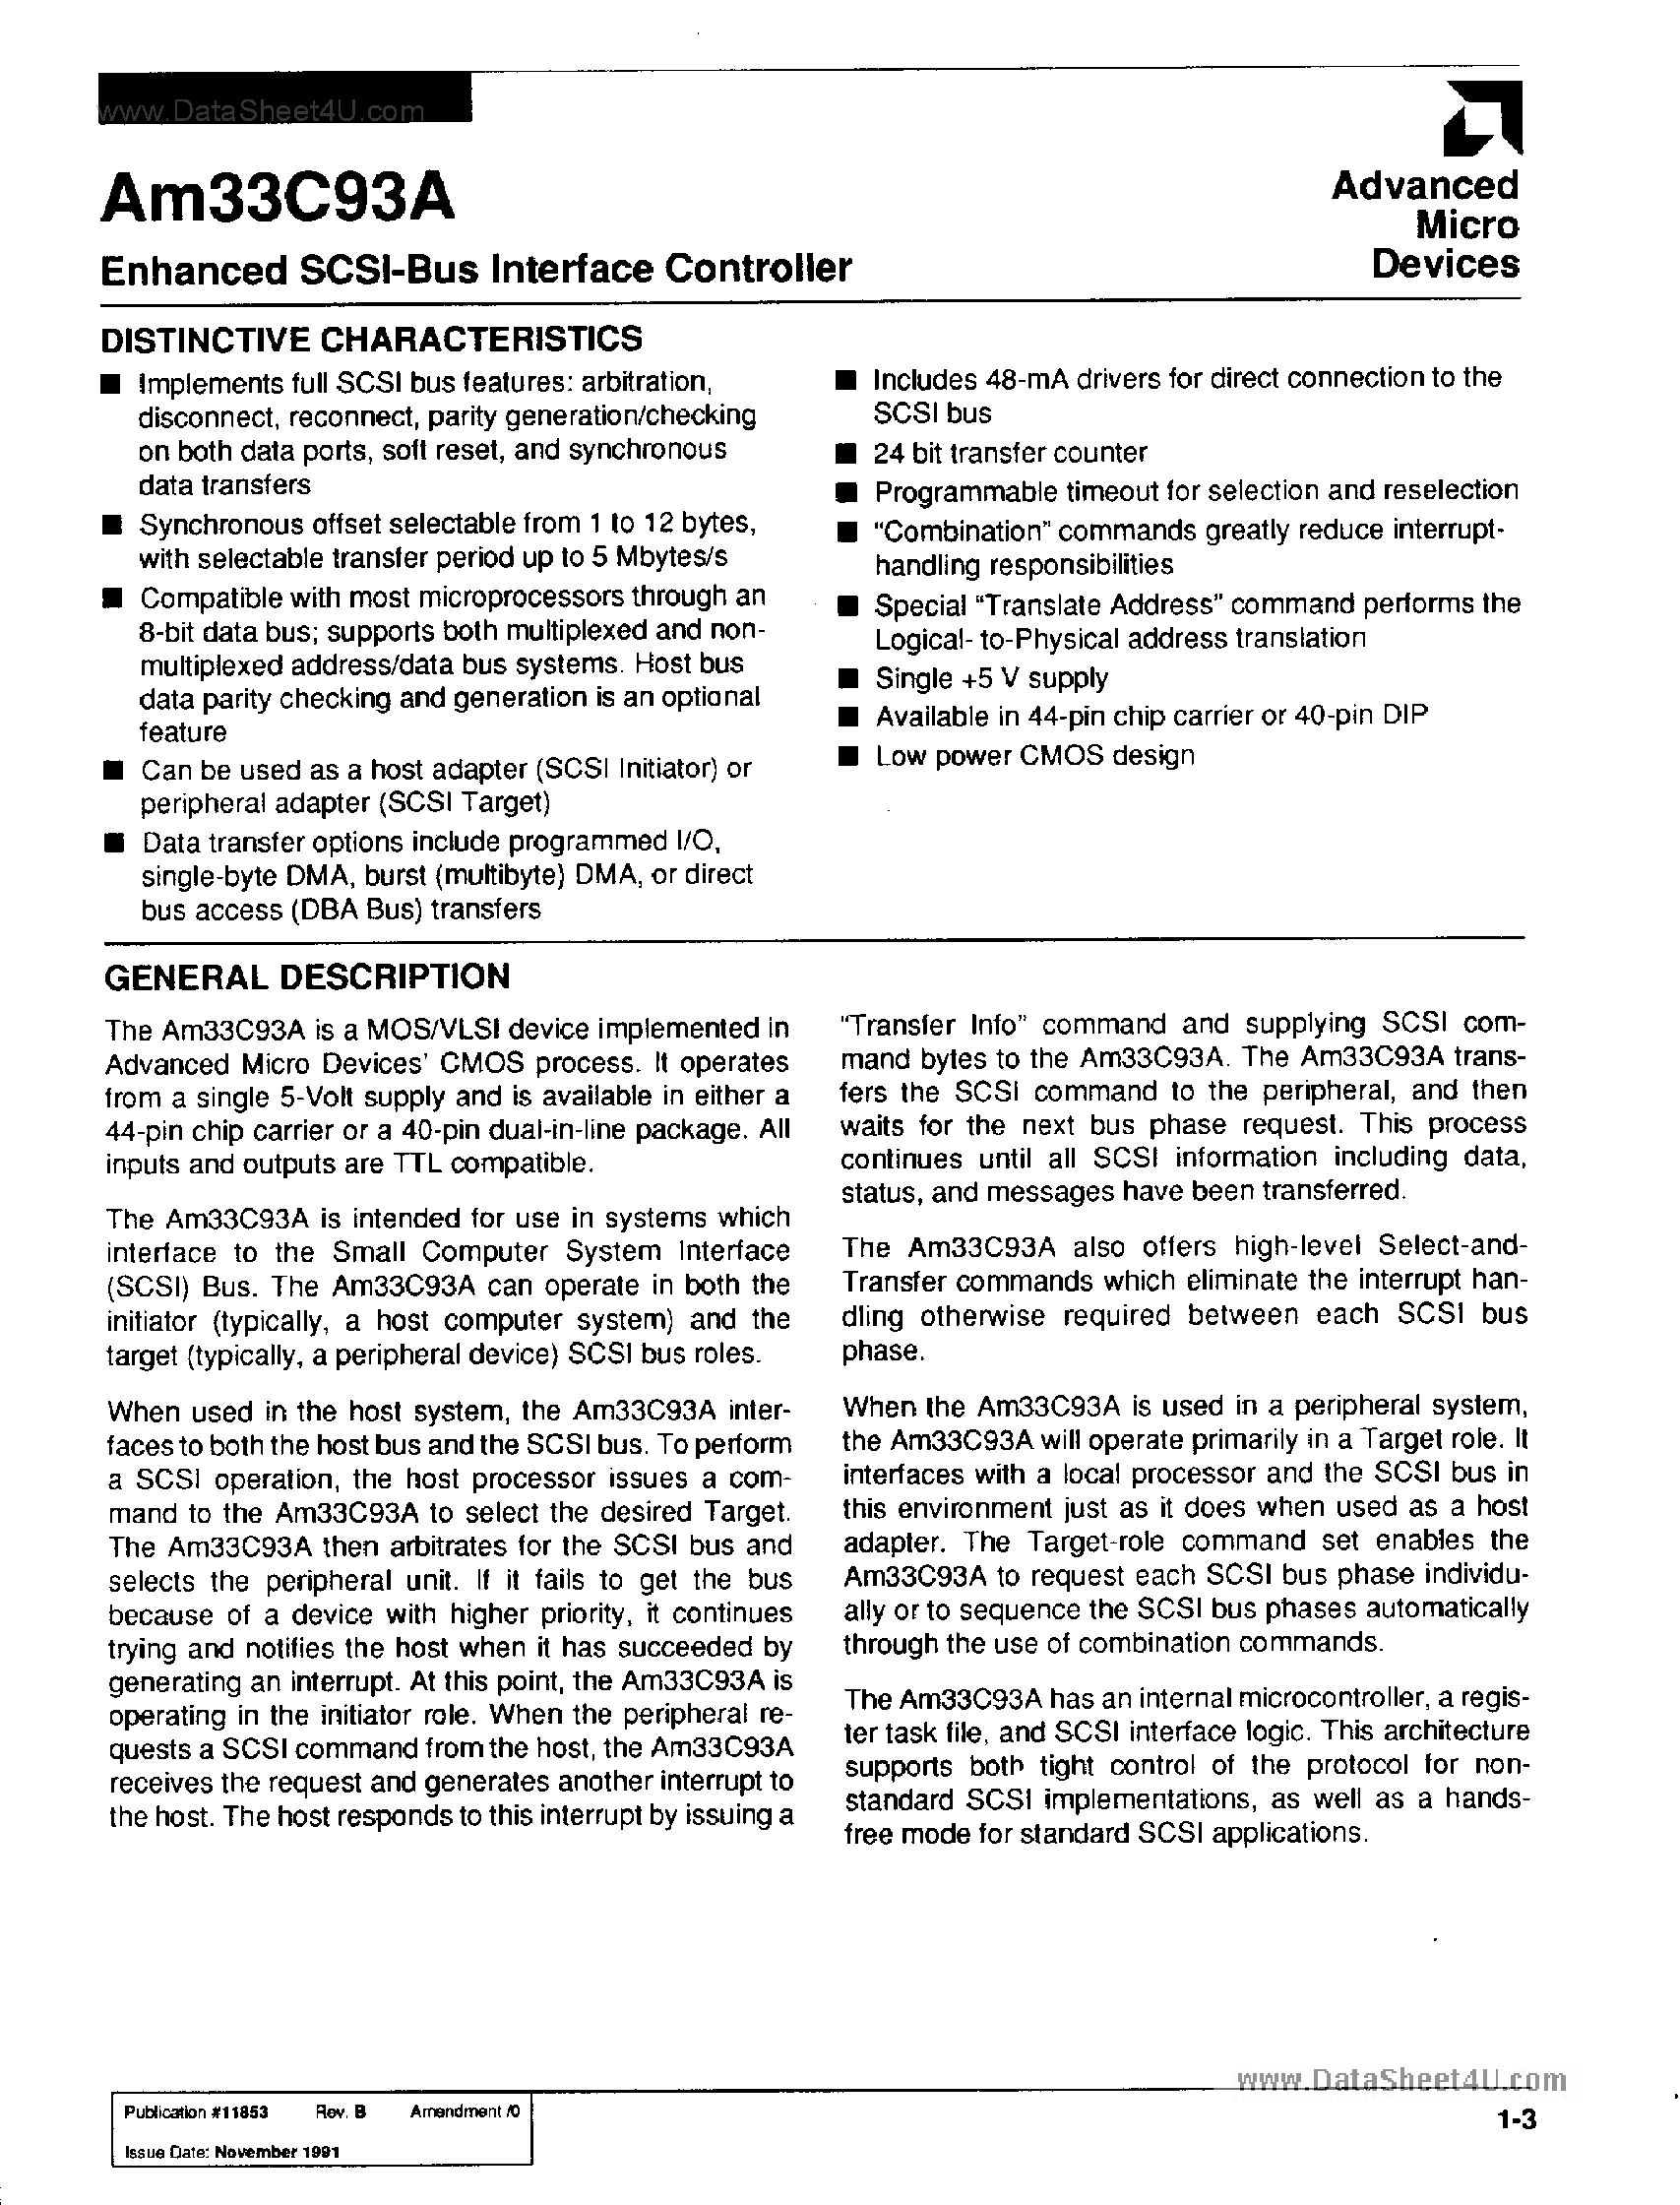 Datasheet AM33C93A - ENHANCED SCSI BUS INTERFACE CONTROLLER page 1